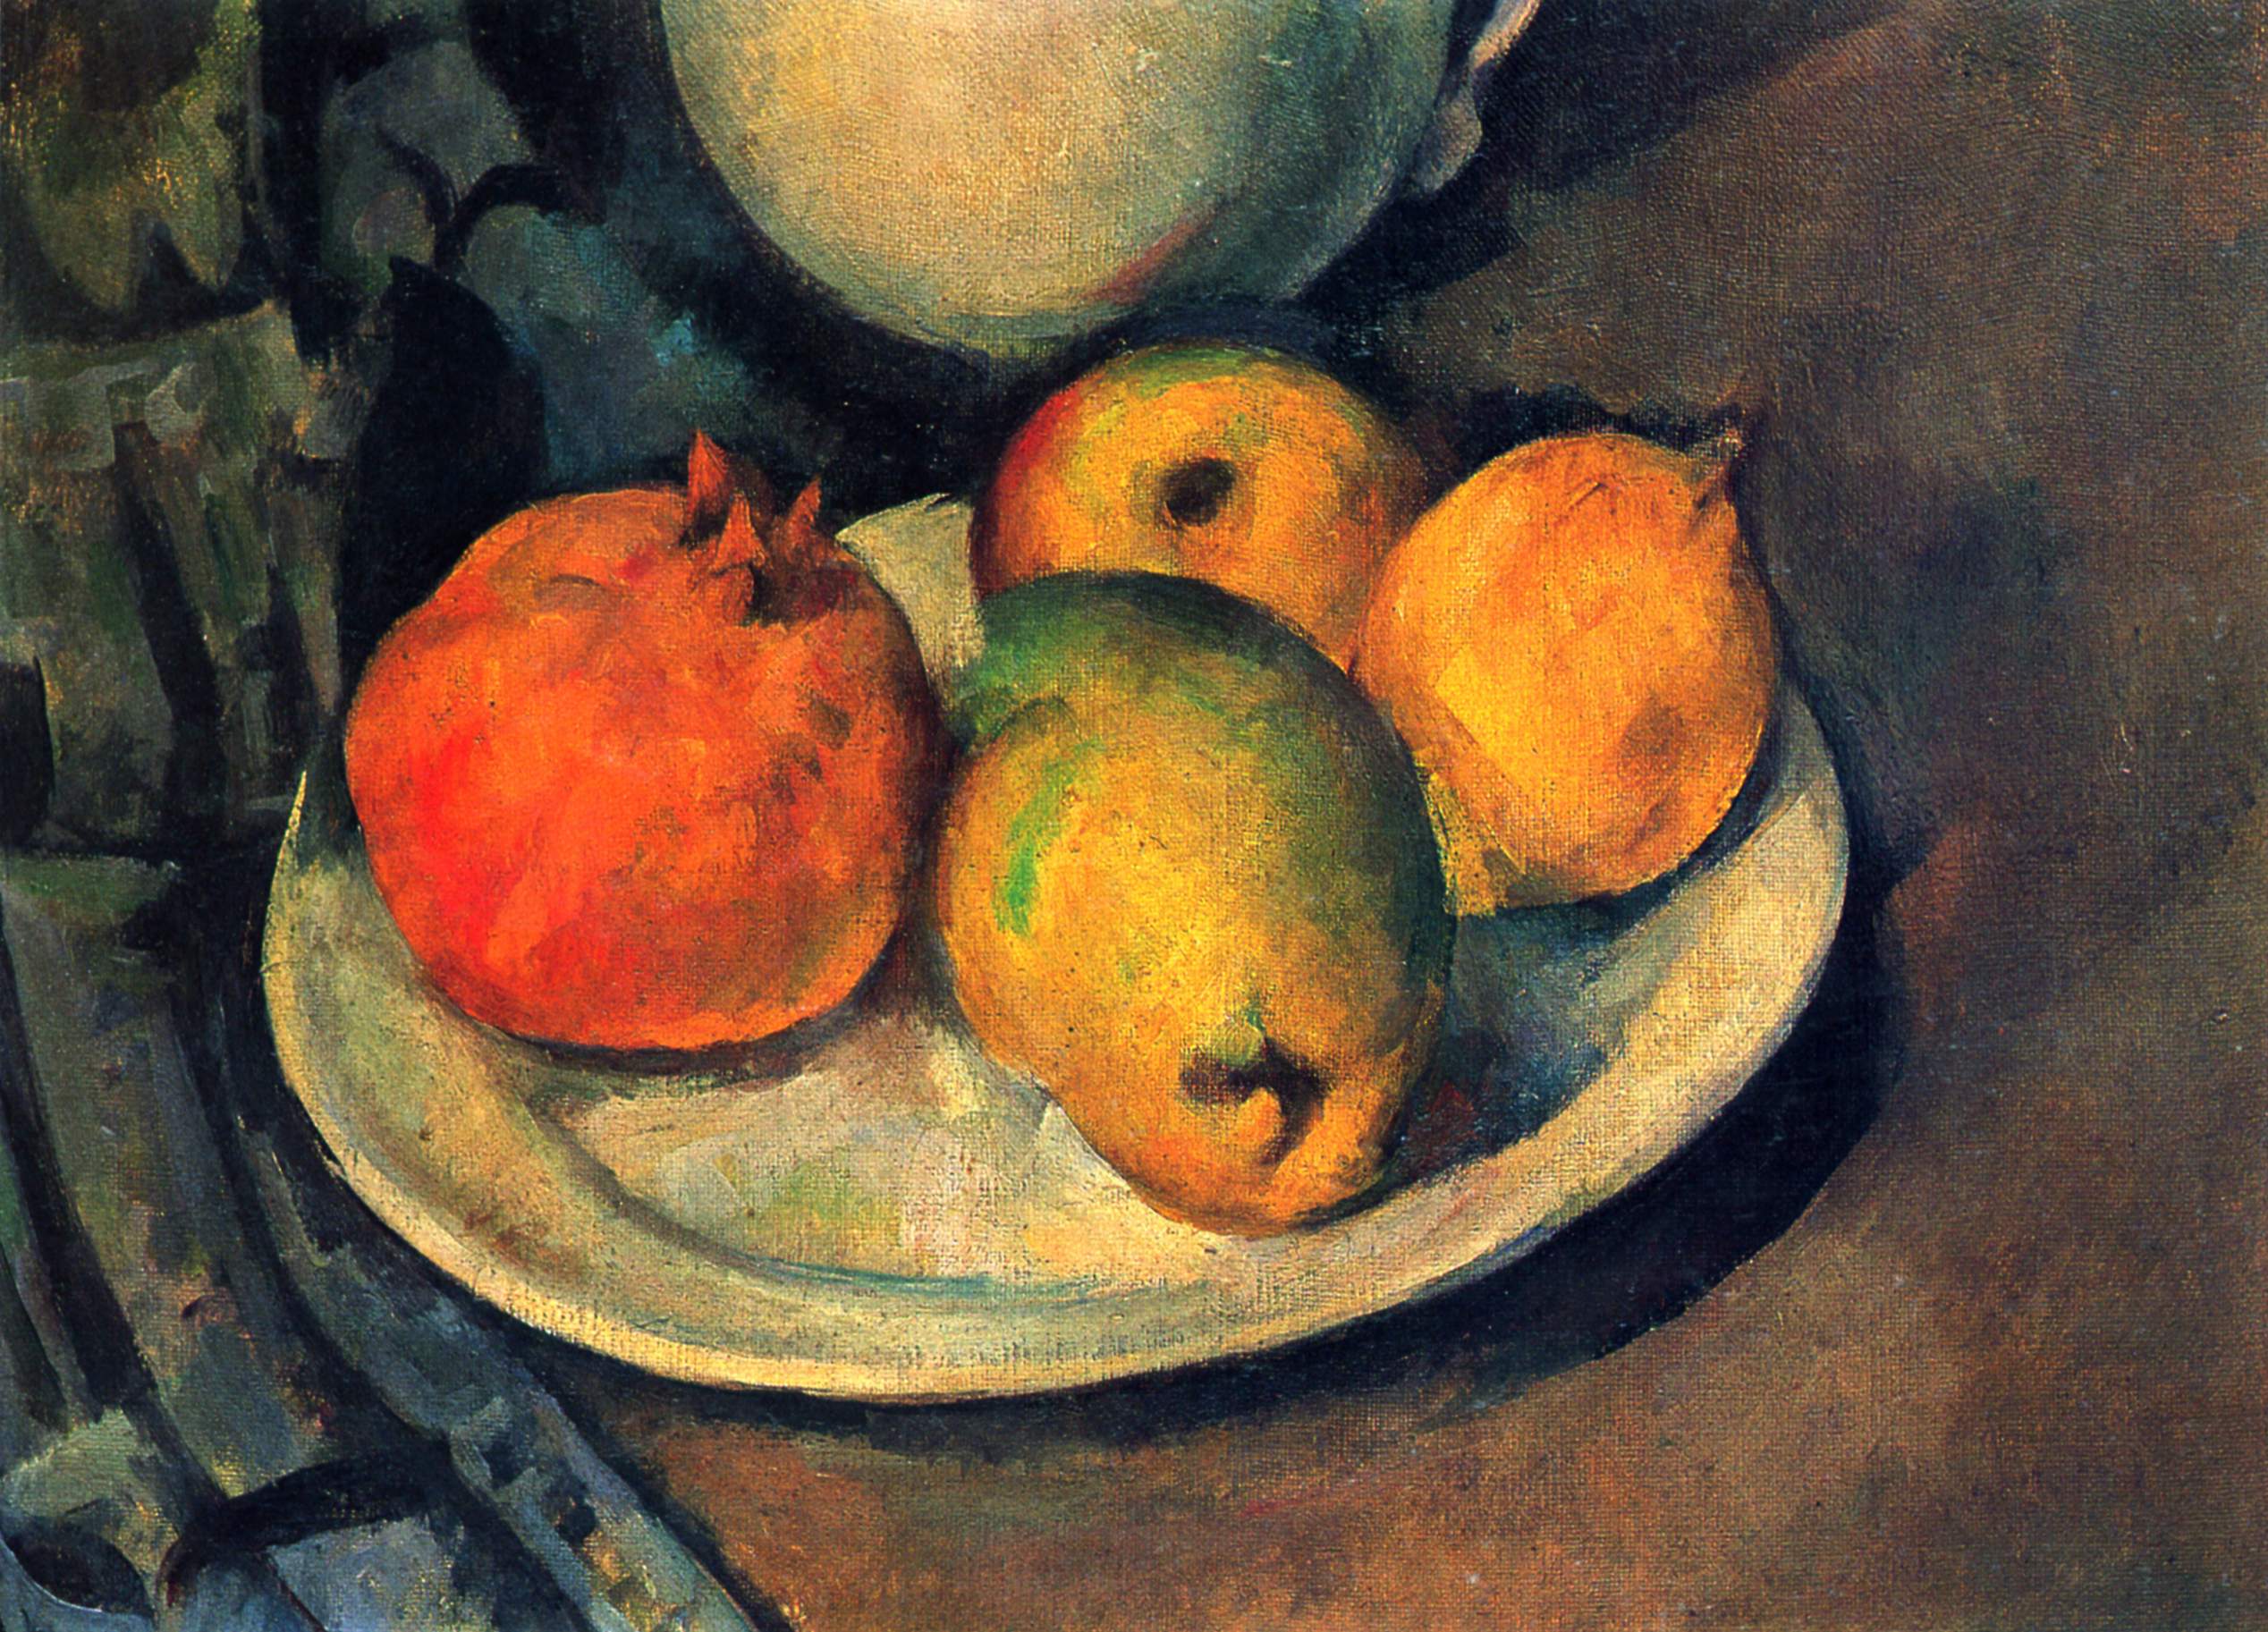 Stilleven met granaatappel en peren by Paul Cézanne - 1890 - 27 x 36 cm 